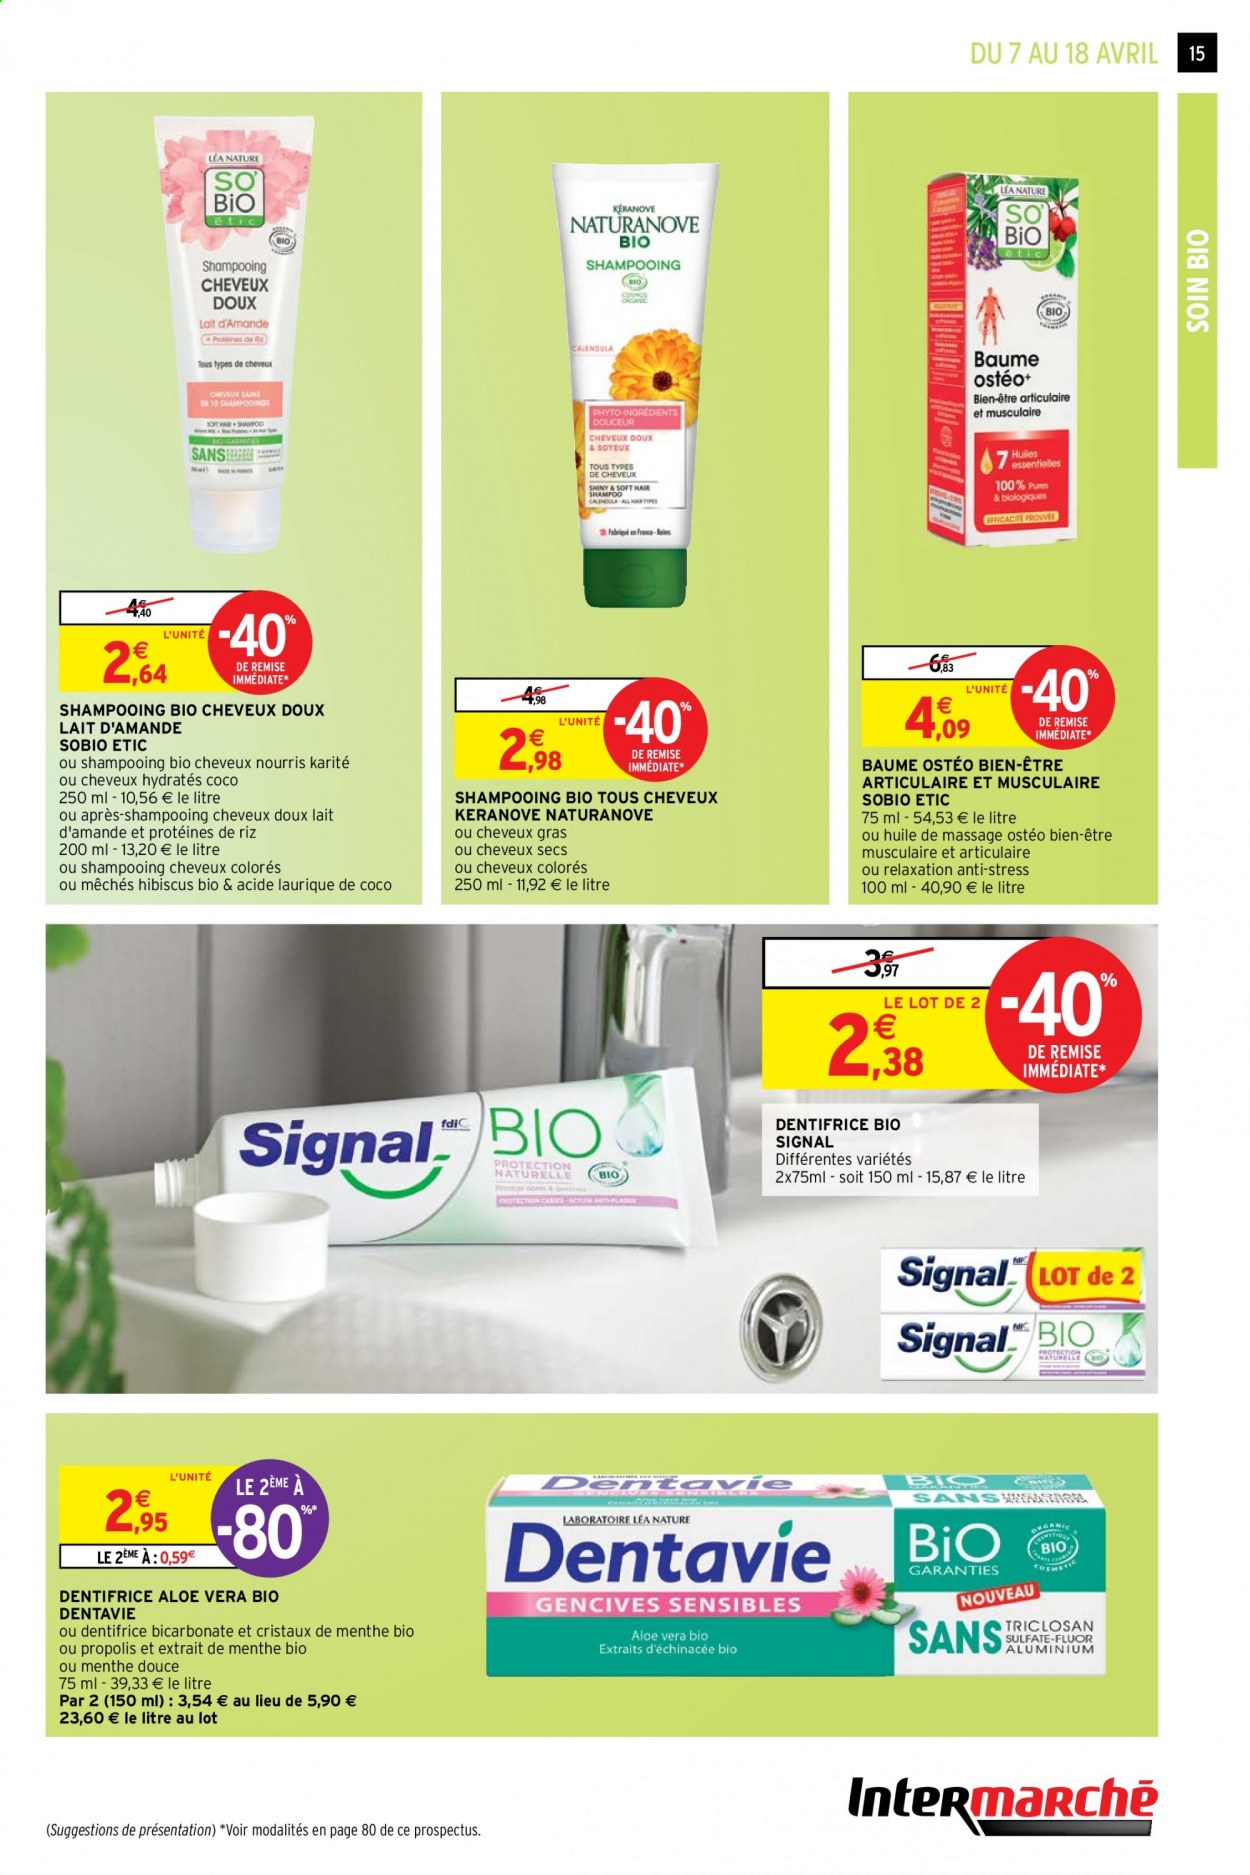 thumbnail - Catalogue Intermarché Hyper - 07/04/2021 - 18/04/2021 - Produits soldés - lait, shampooing, dentifrice, Signal, mèches, hibiscus. Page 15.